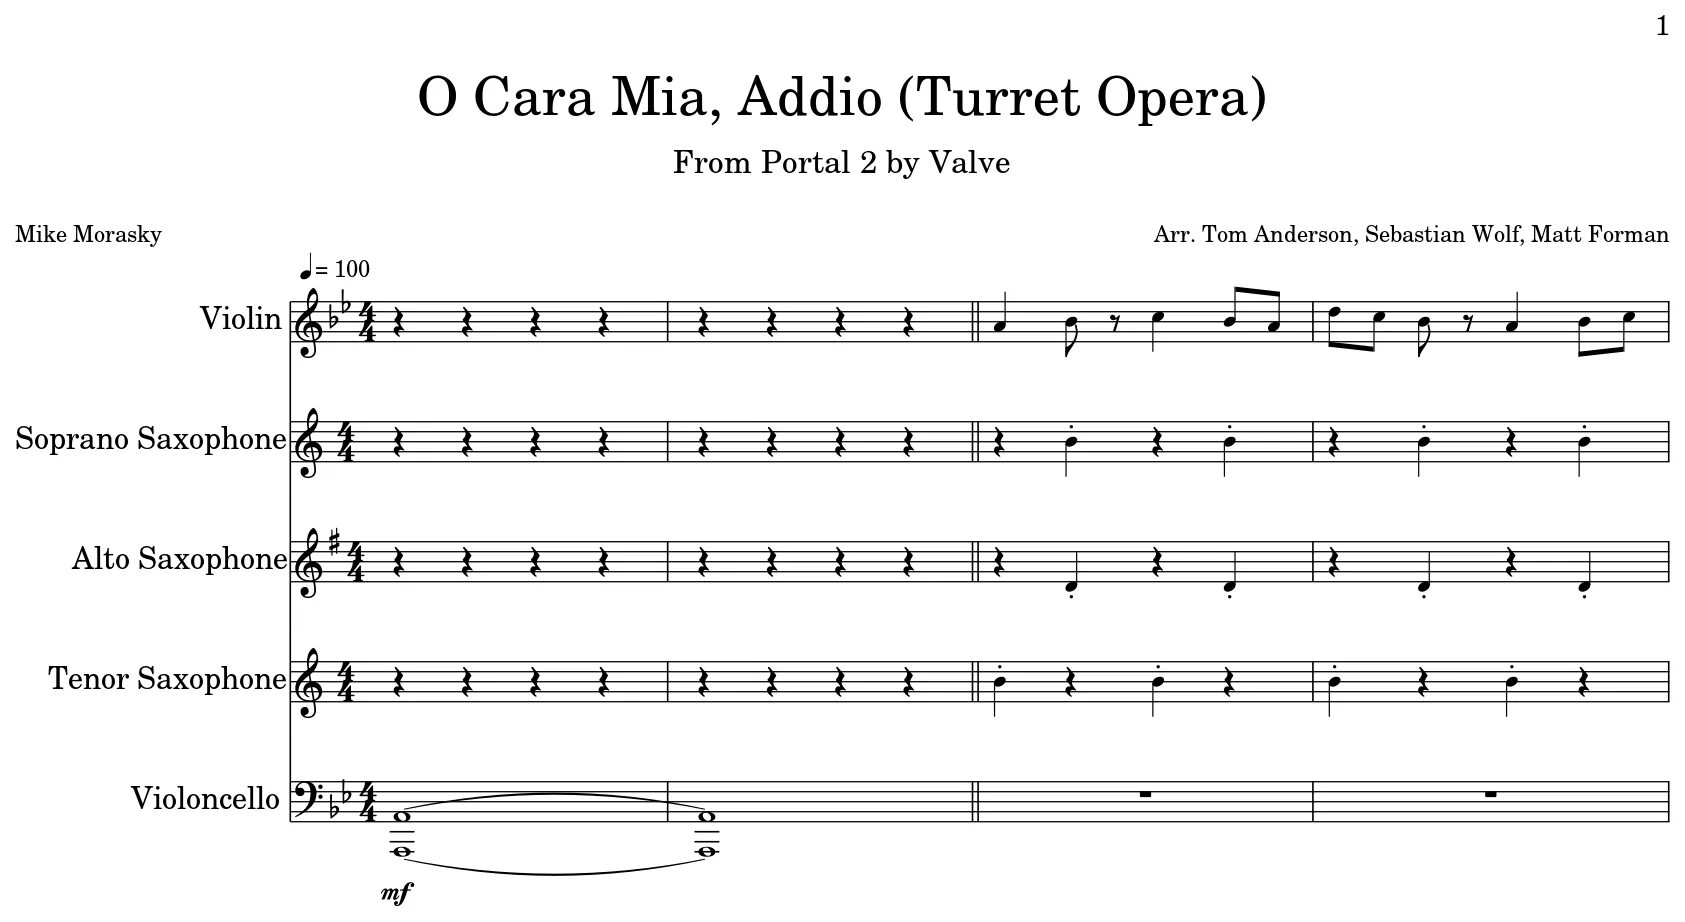 Cara mia перевод. Опера турелей Ноты. Cara Mia Adio Ноты для гитары. Майк Мораски Valve. Cara Mia перевод на русский.